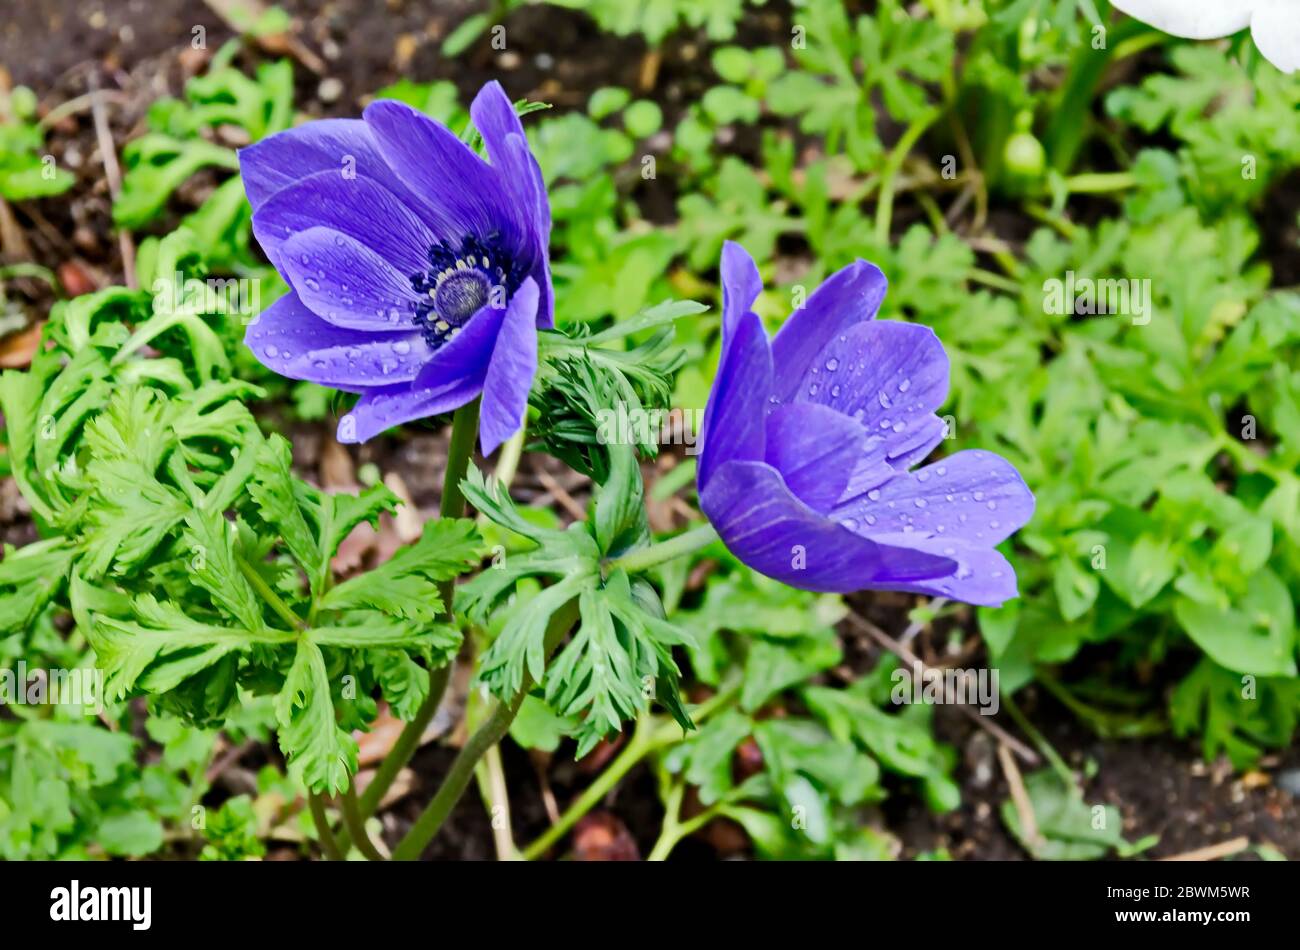 Wood Anemone, Anemone Nemorosa, windflower, blooming  purple garden flower with blue stamens, Sofia, Bulgaria Stock Photo